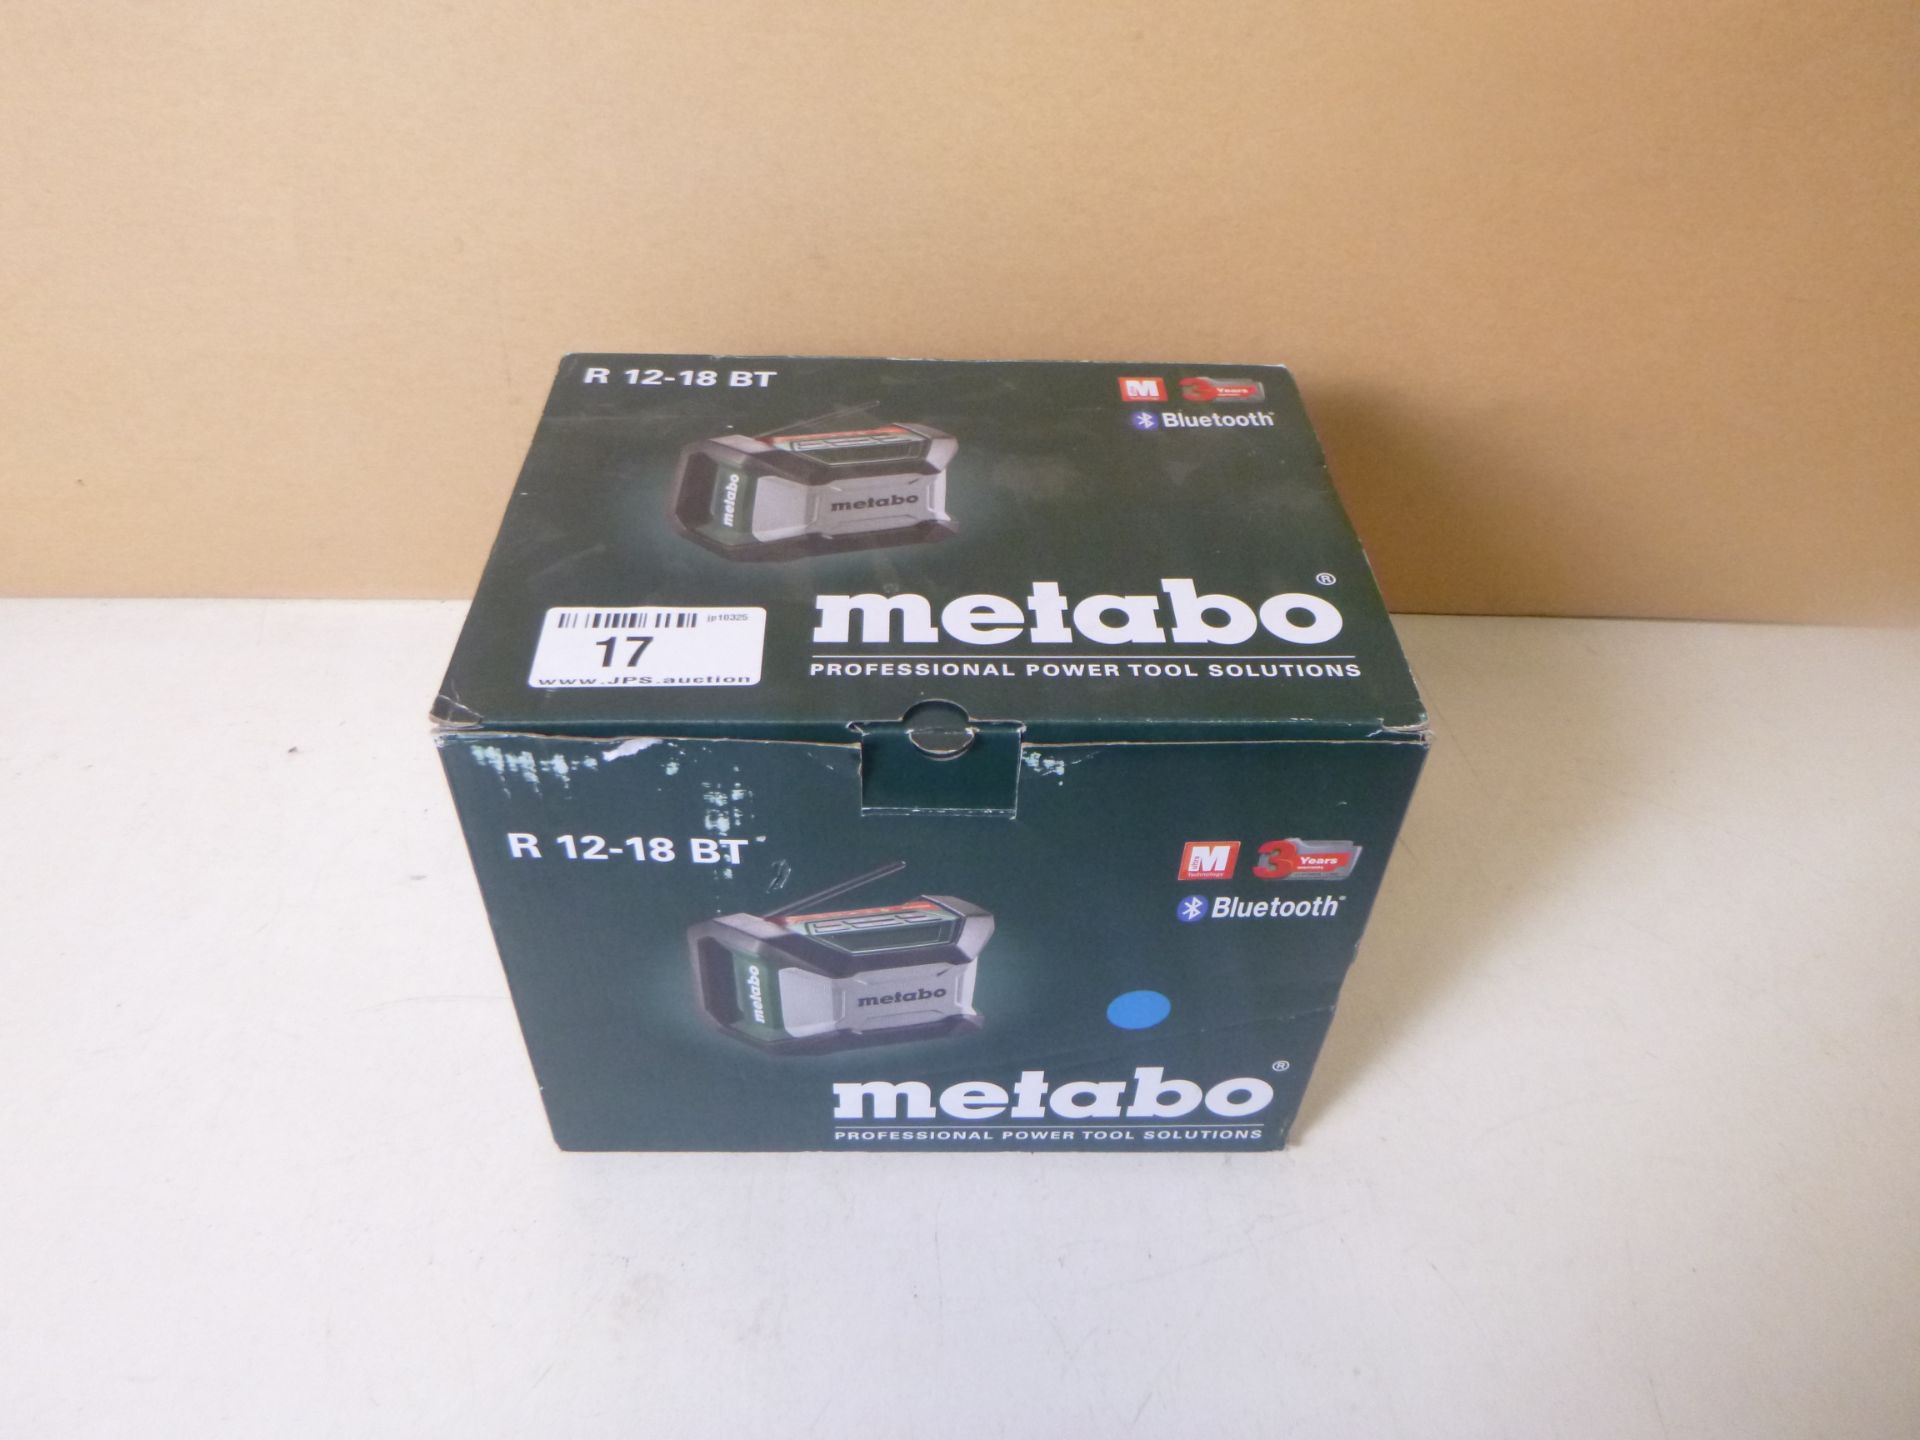 1 x Metabo R 12-18 BT (600777380) Cordless Worksite Radio (Bare Unit) | EAN: 4007430336576 | RRP £54